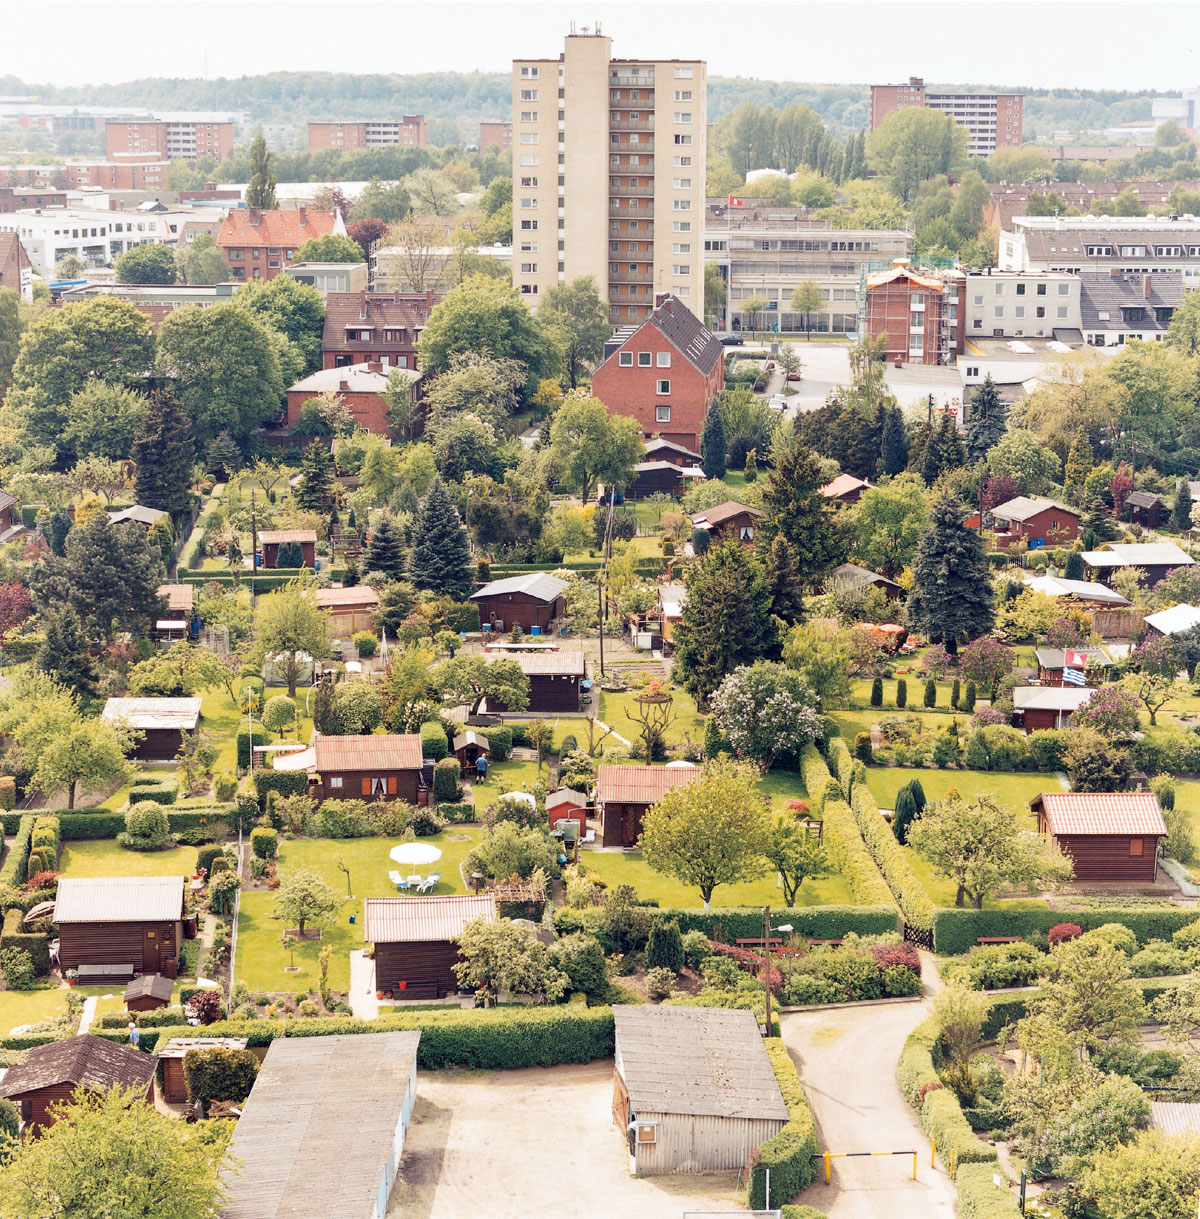 An aerial photograph by artist Enver Hirsch of Schreber gardens in Germany.